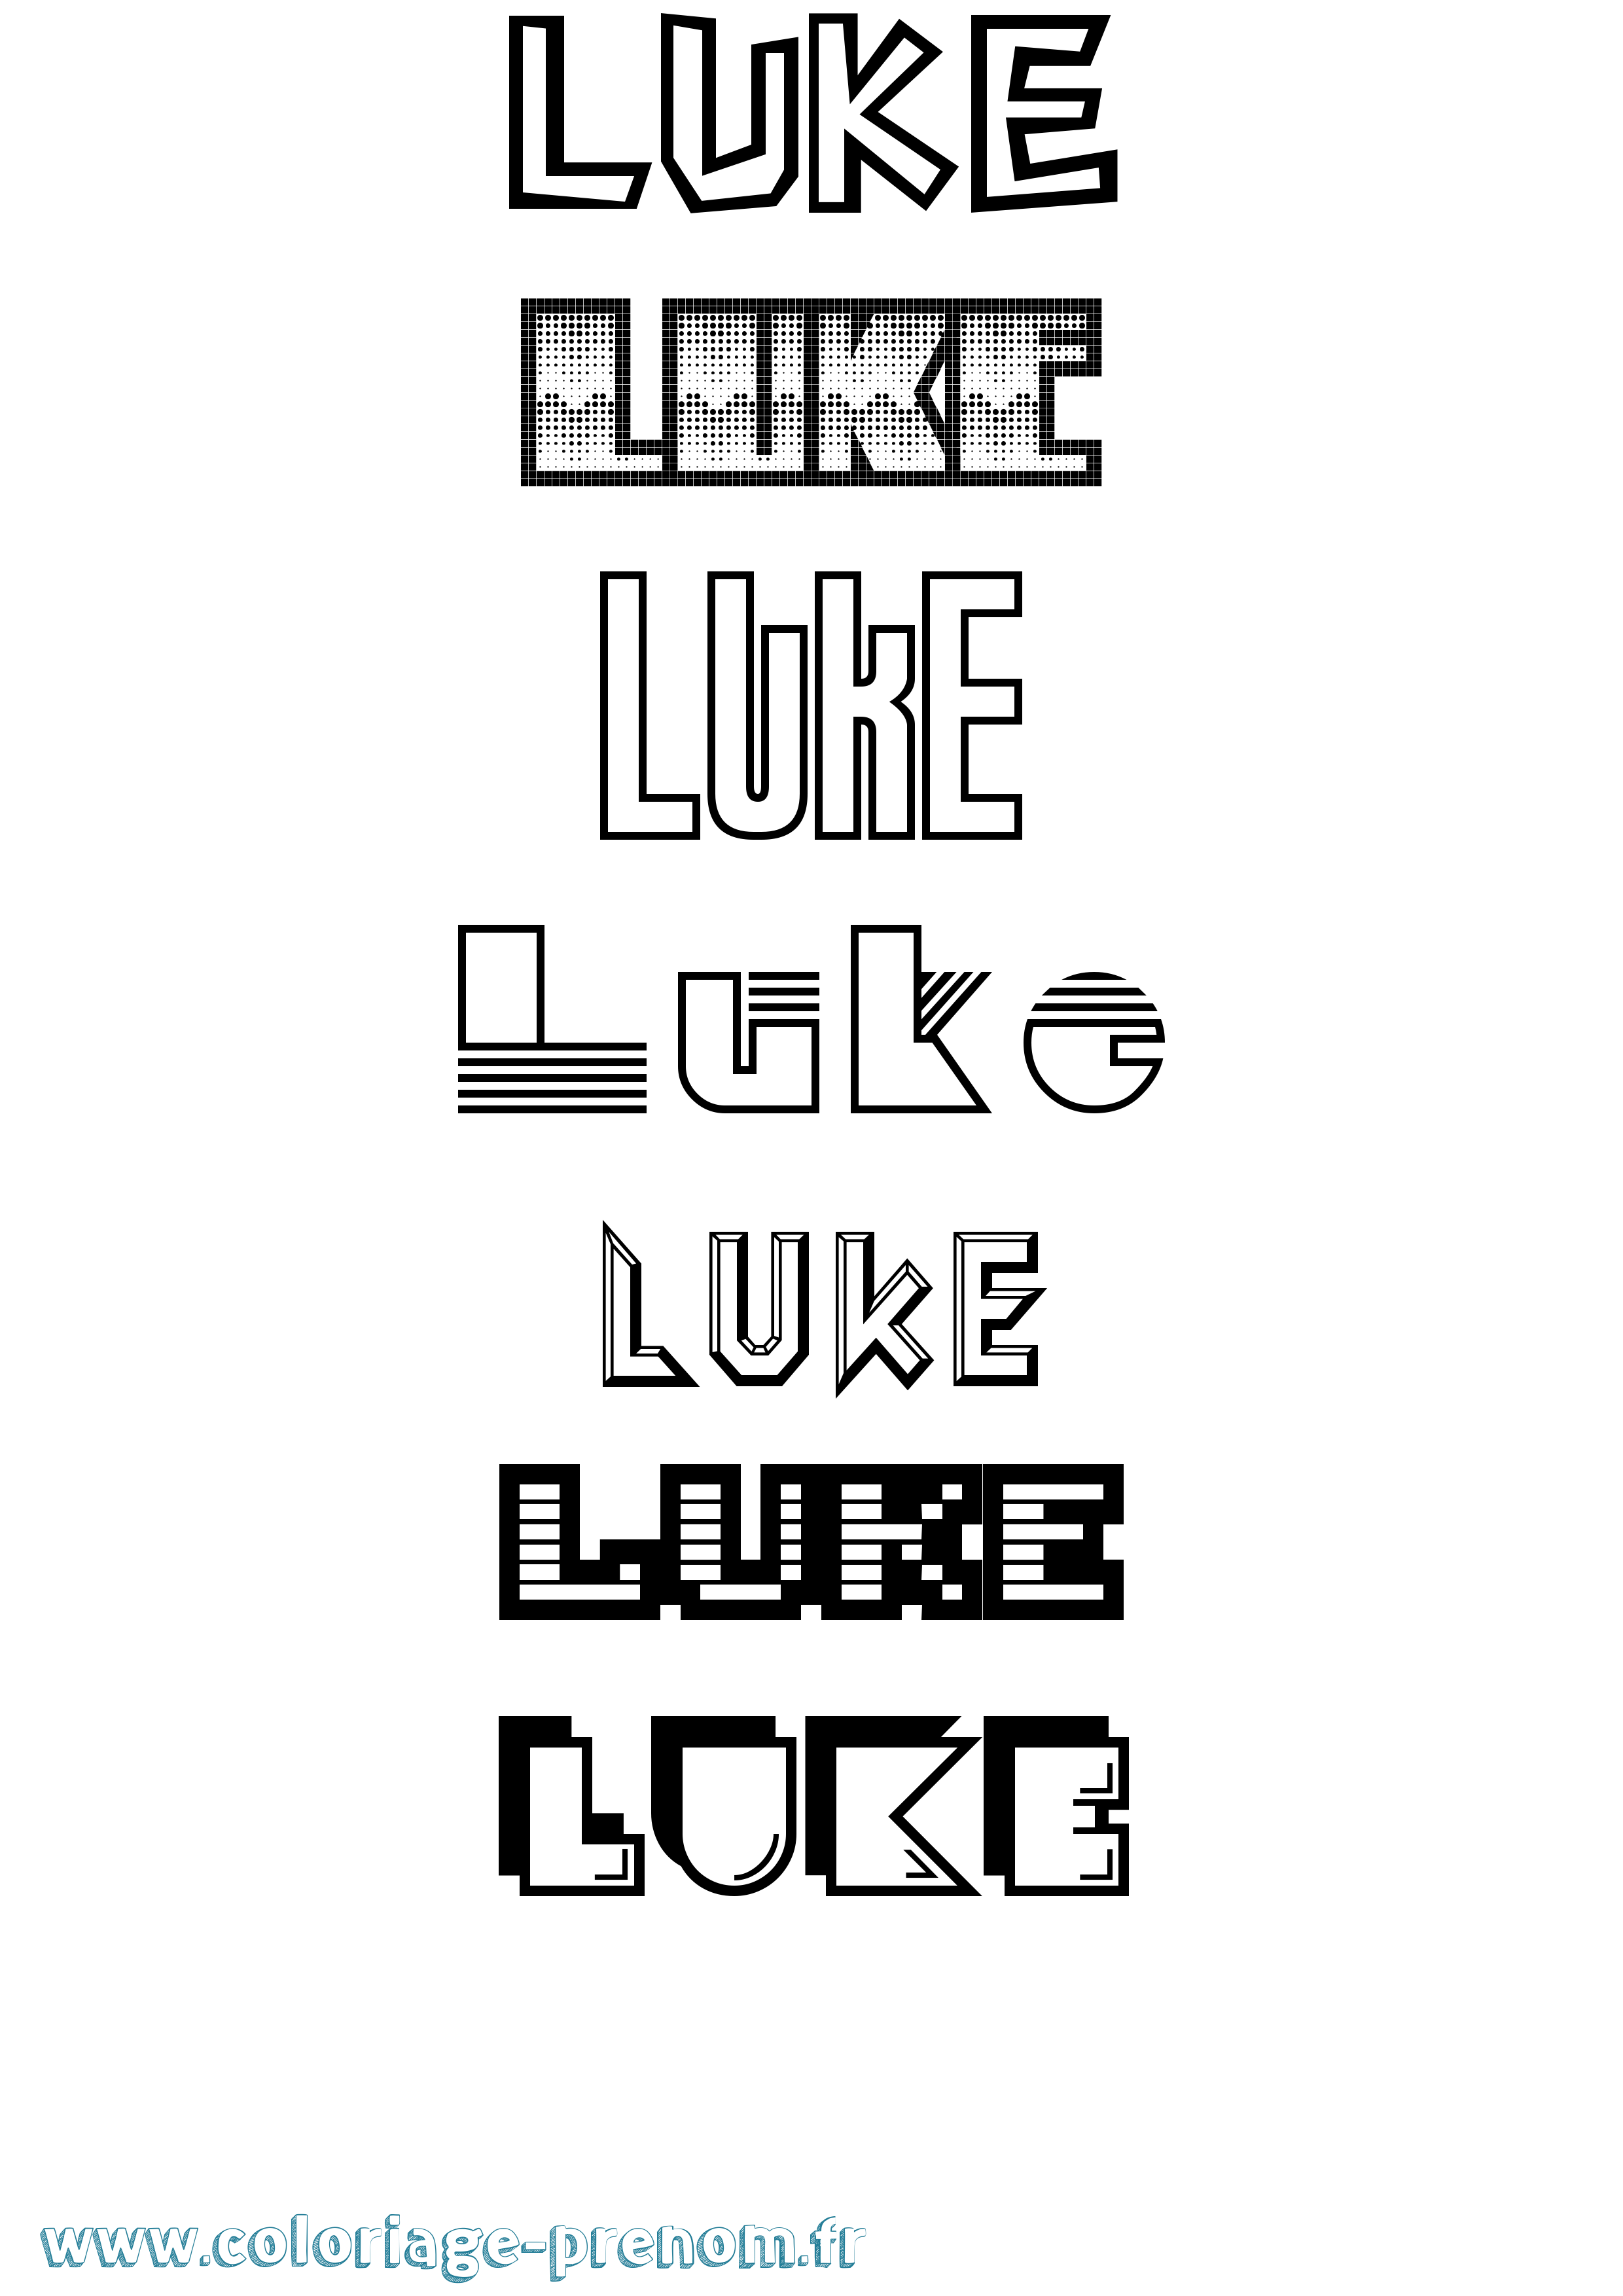 Coloriage prénom Luke